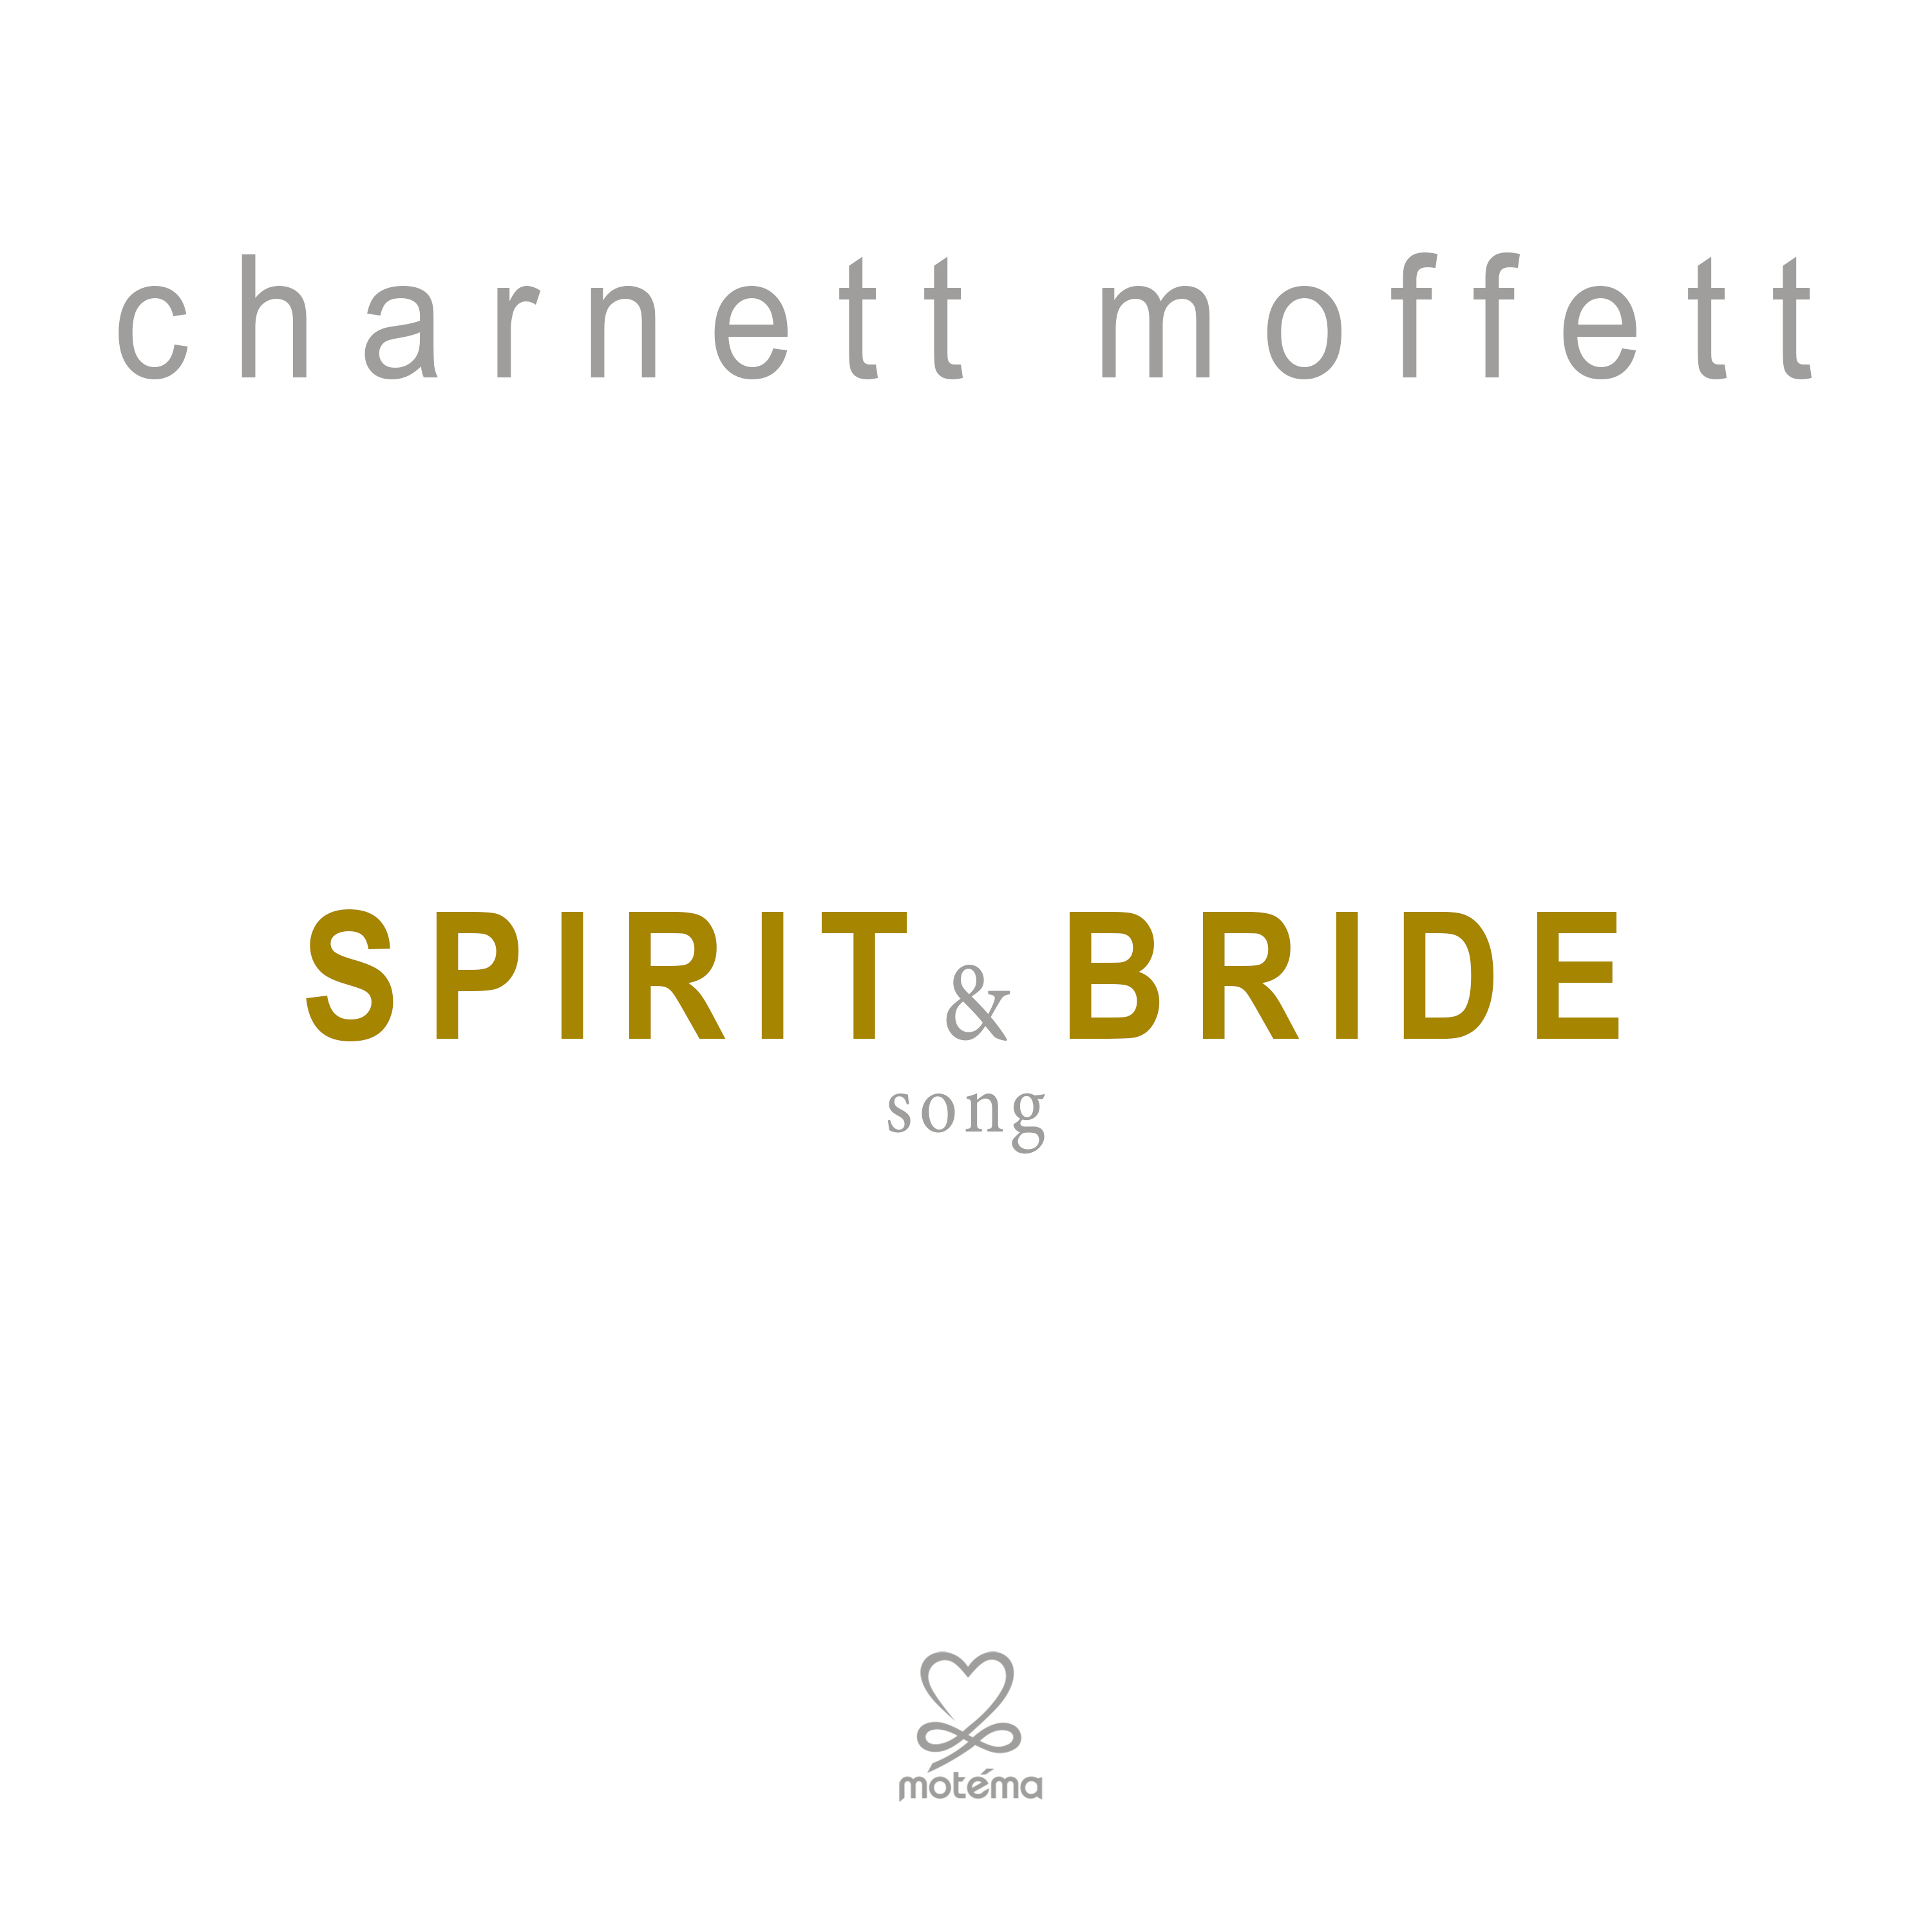 New Charnett Moffett Single Spirit & Bride Song Out Now!